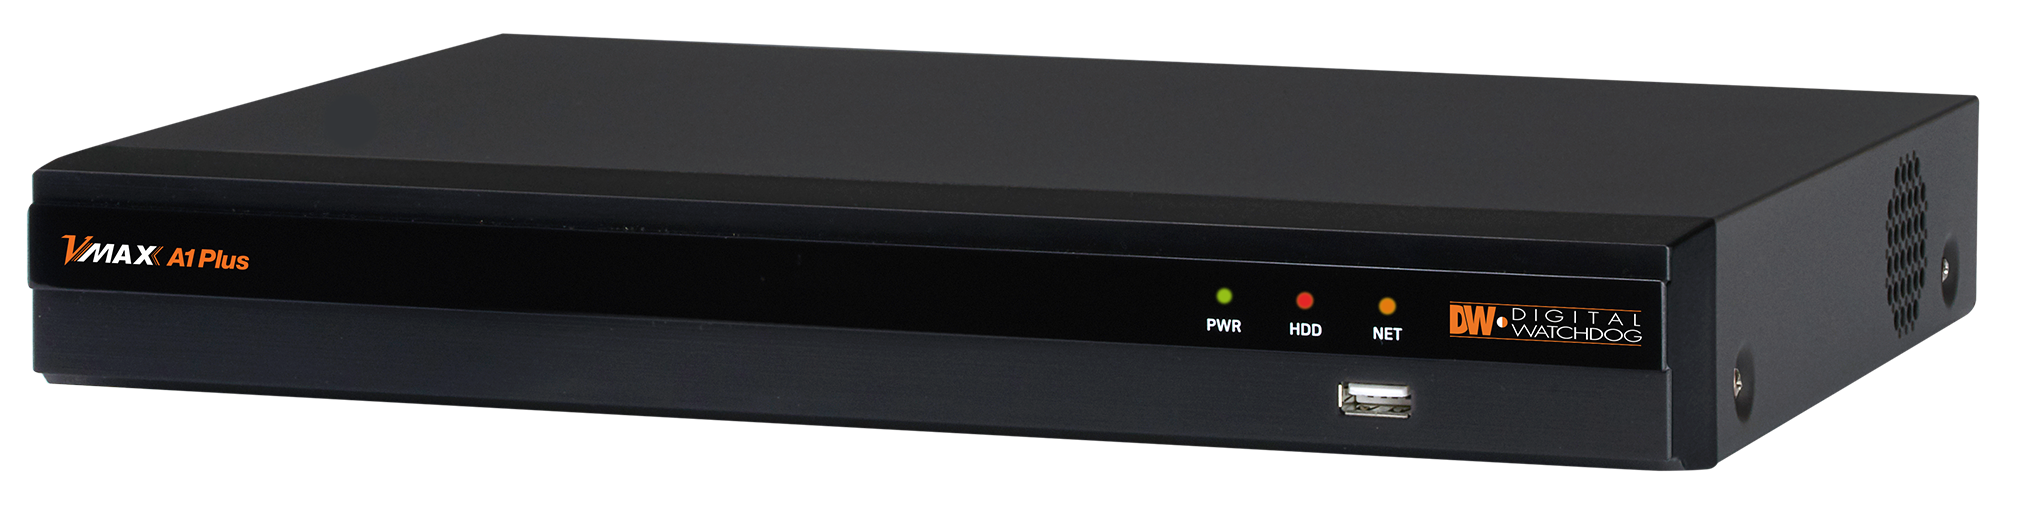 Digital Watchdog DW-VA1P410T  UHDoC - DVR 4ch 4 Channel Universal HD Over Coax DVR